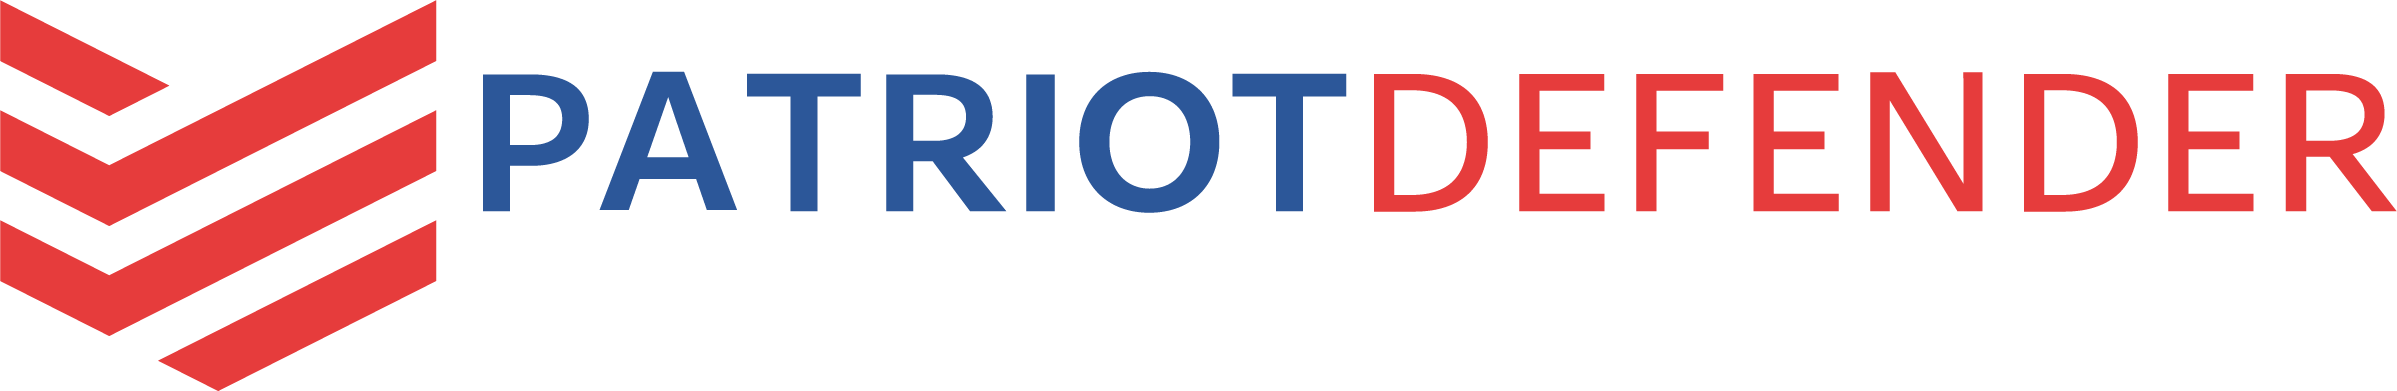 Patriot Defender logo